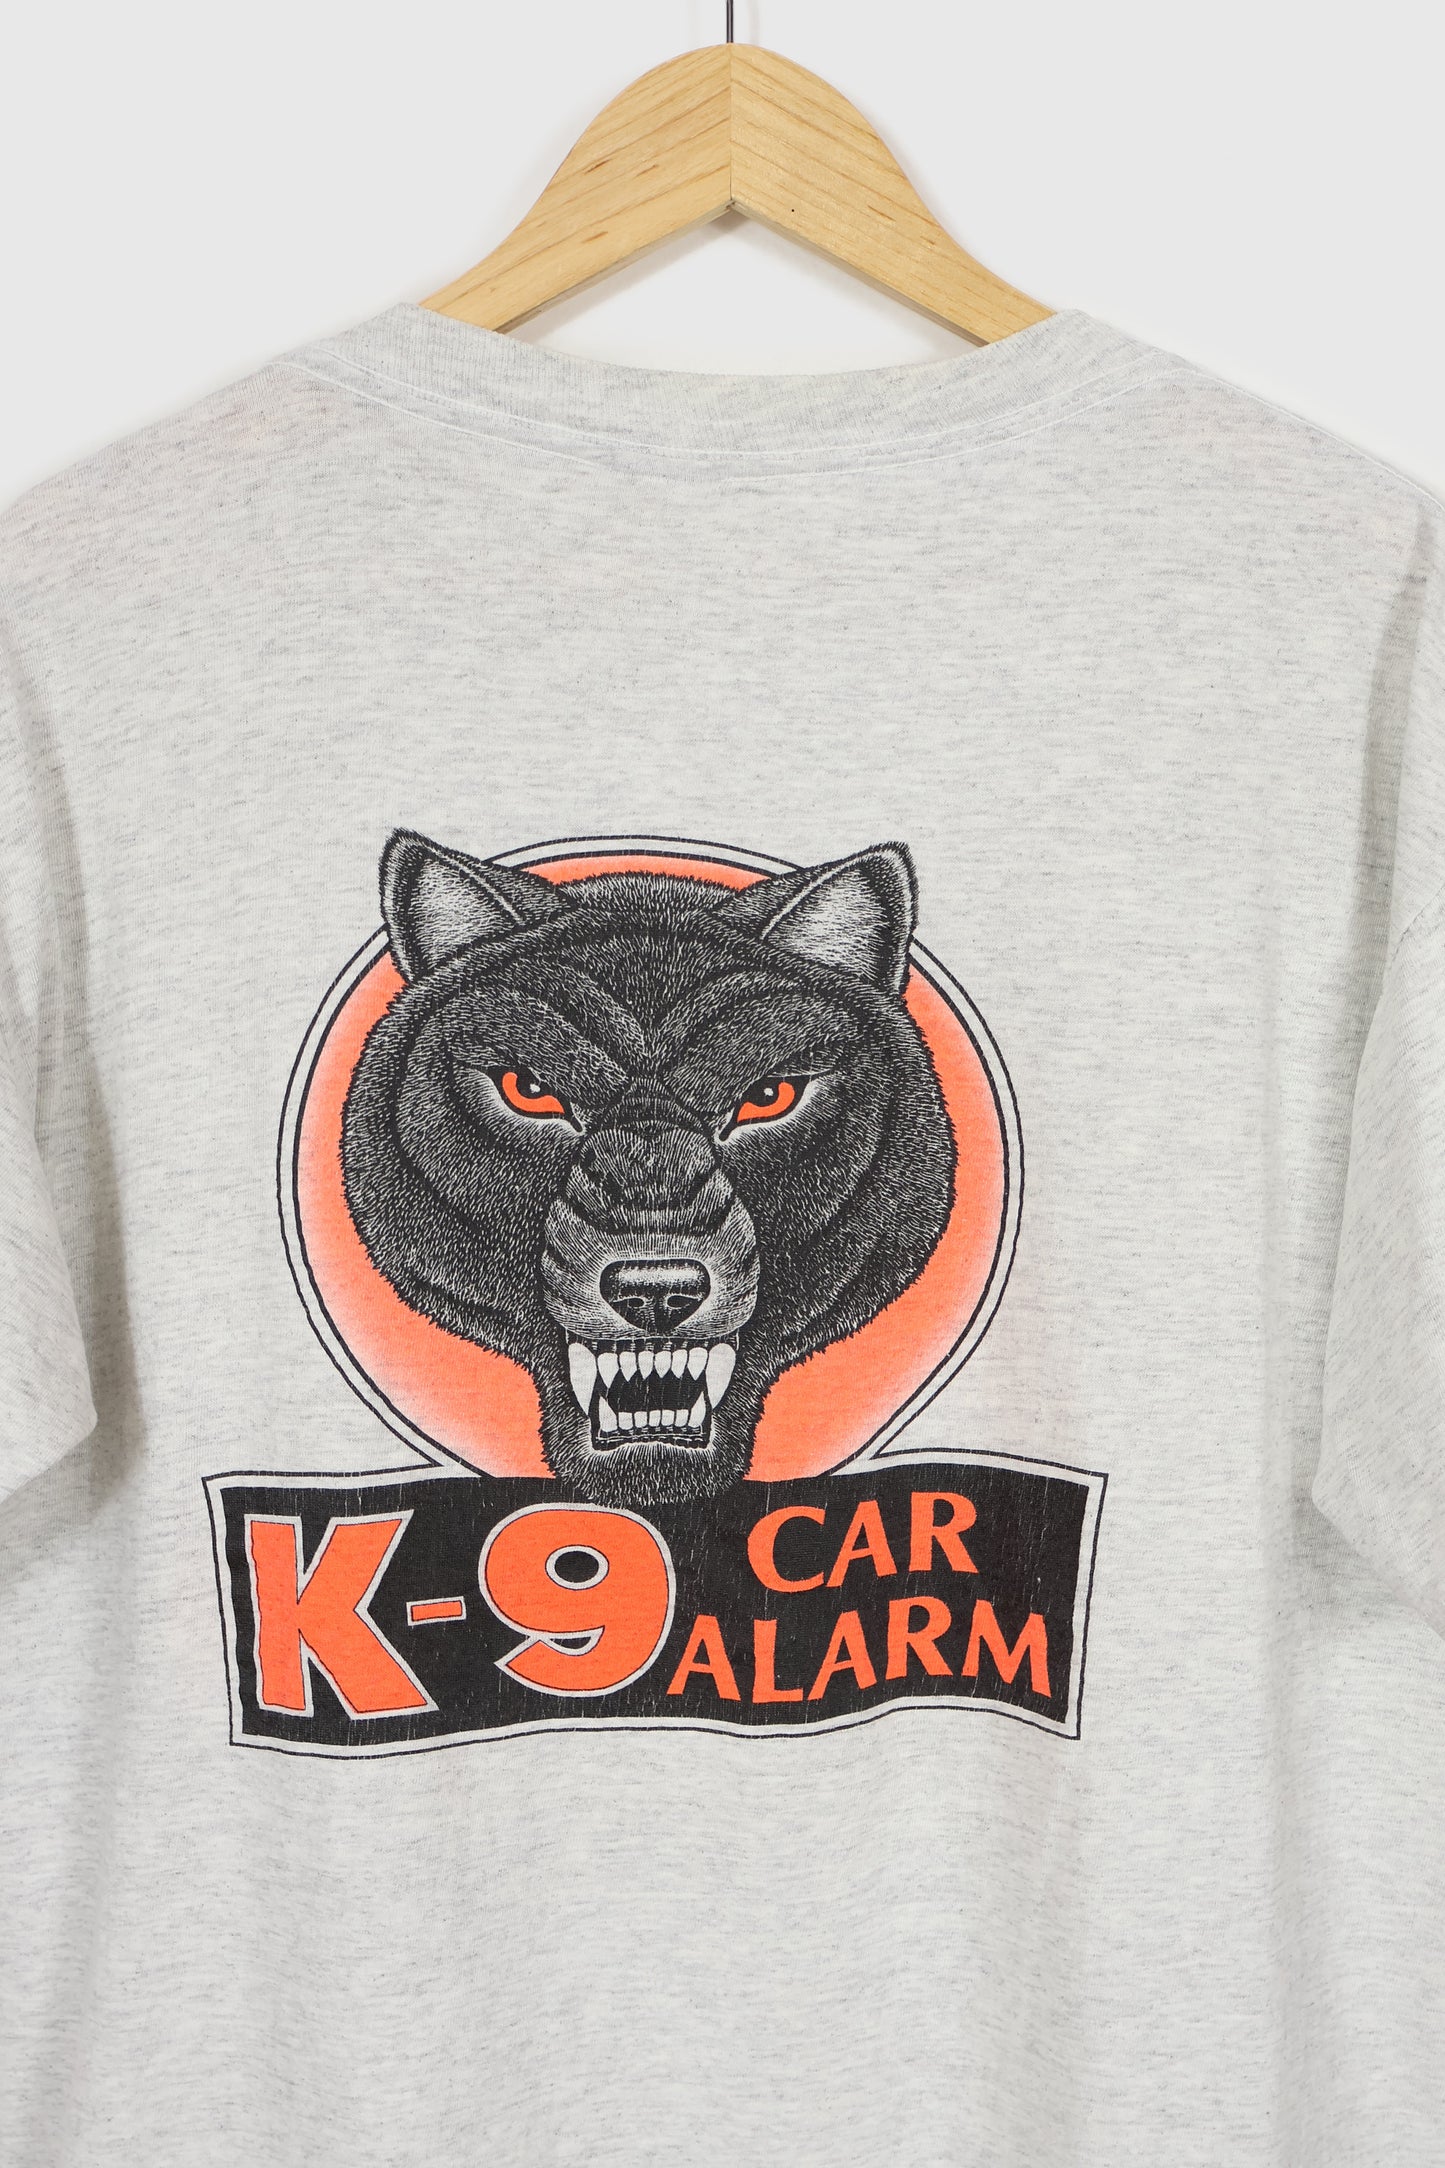 Vintage K-9 Car Alarm Tee